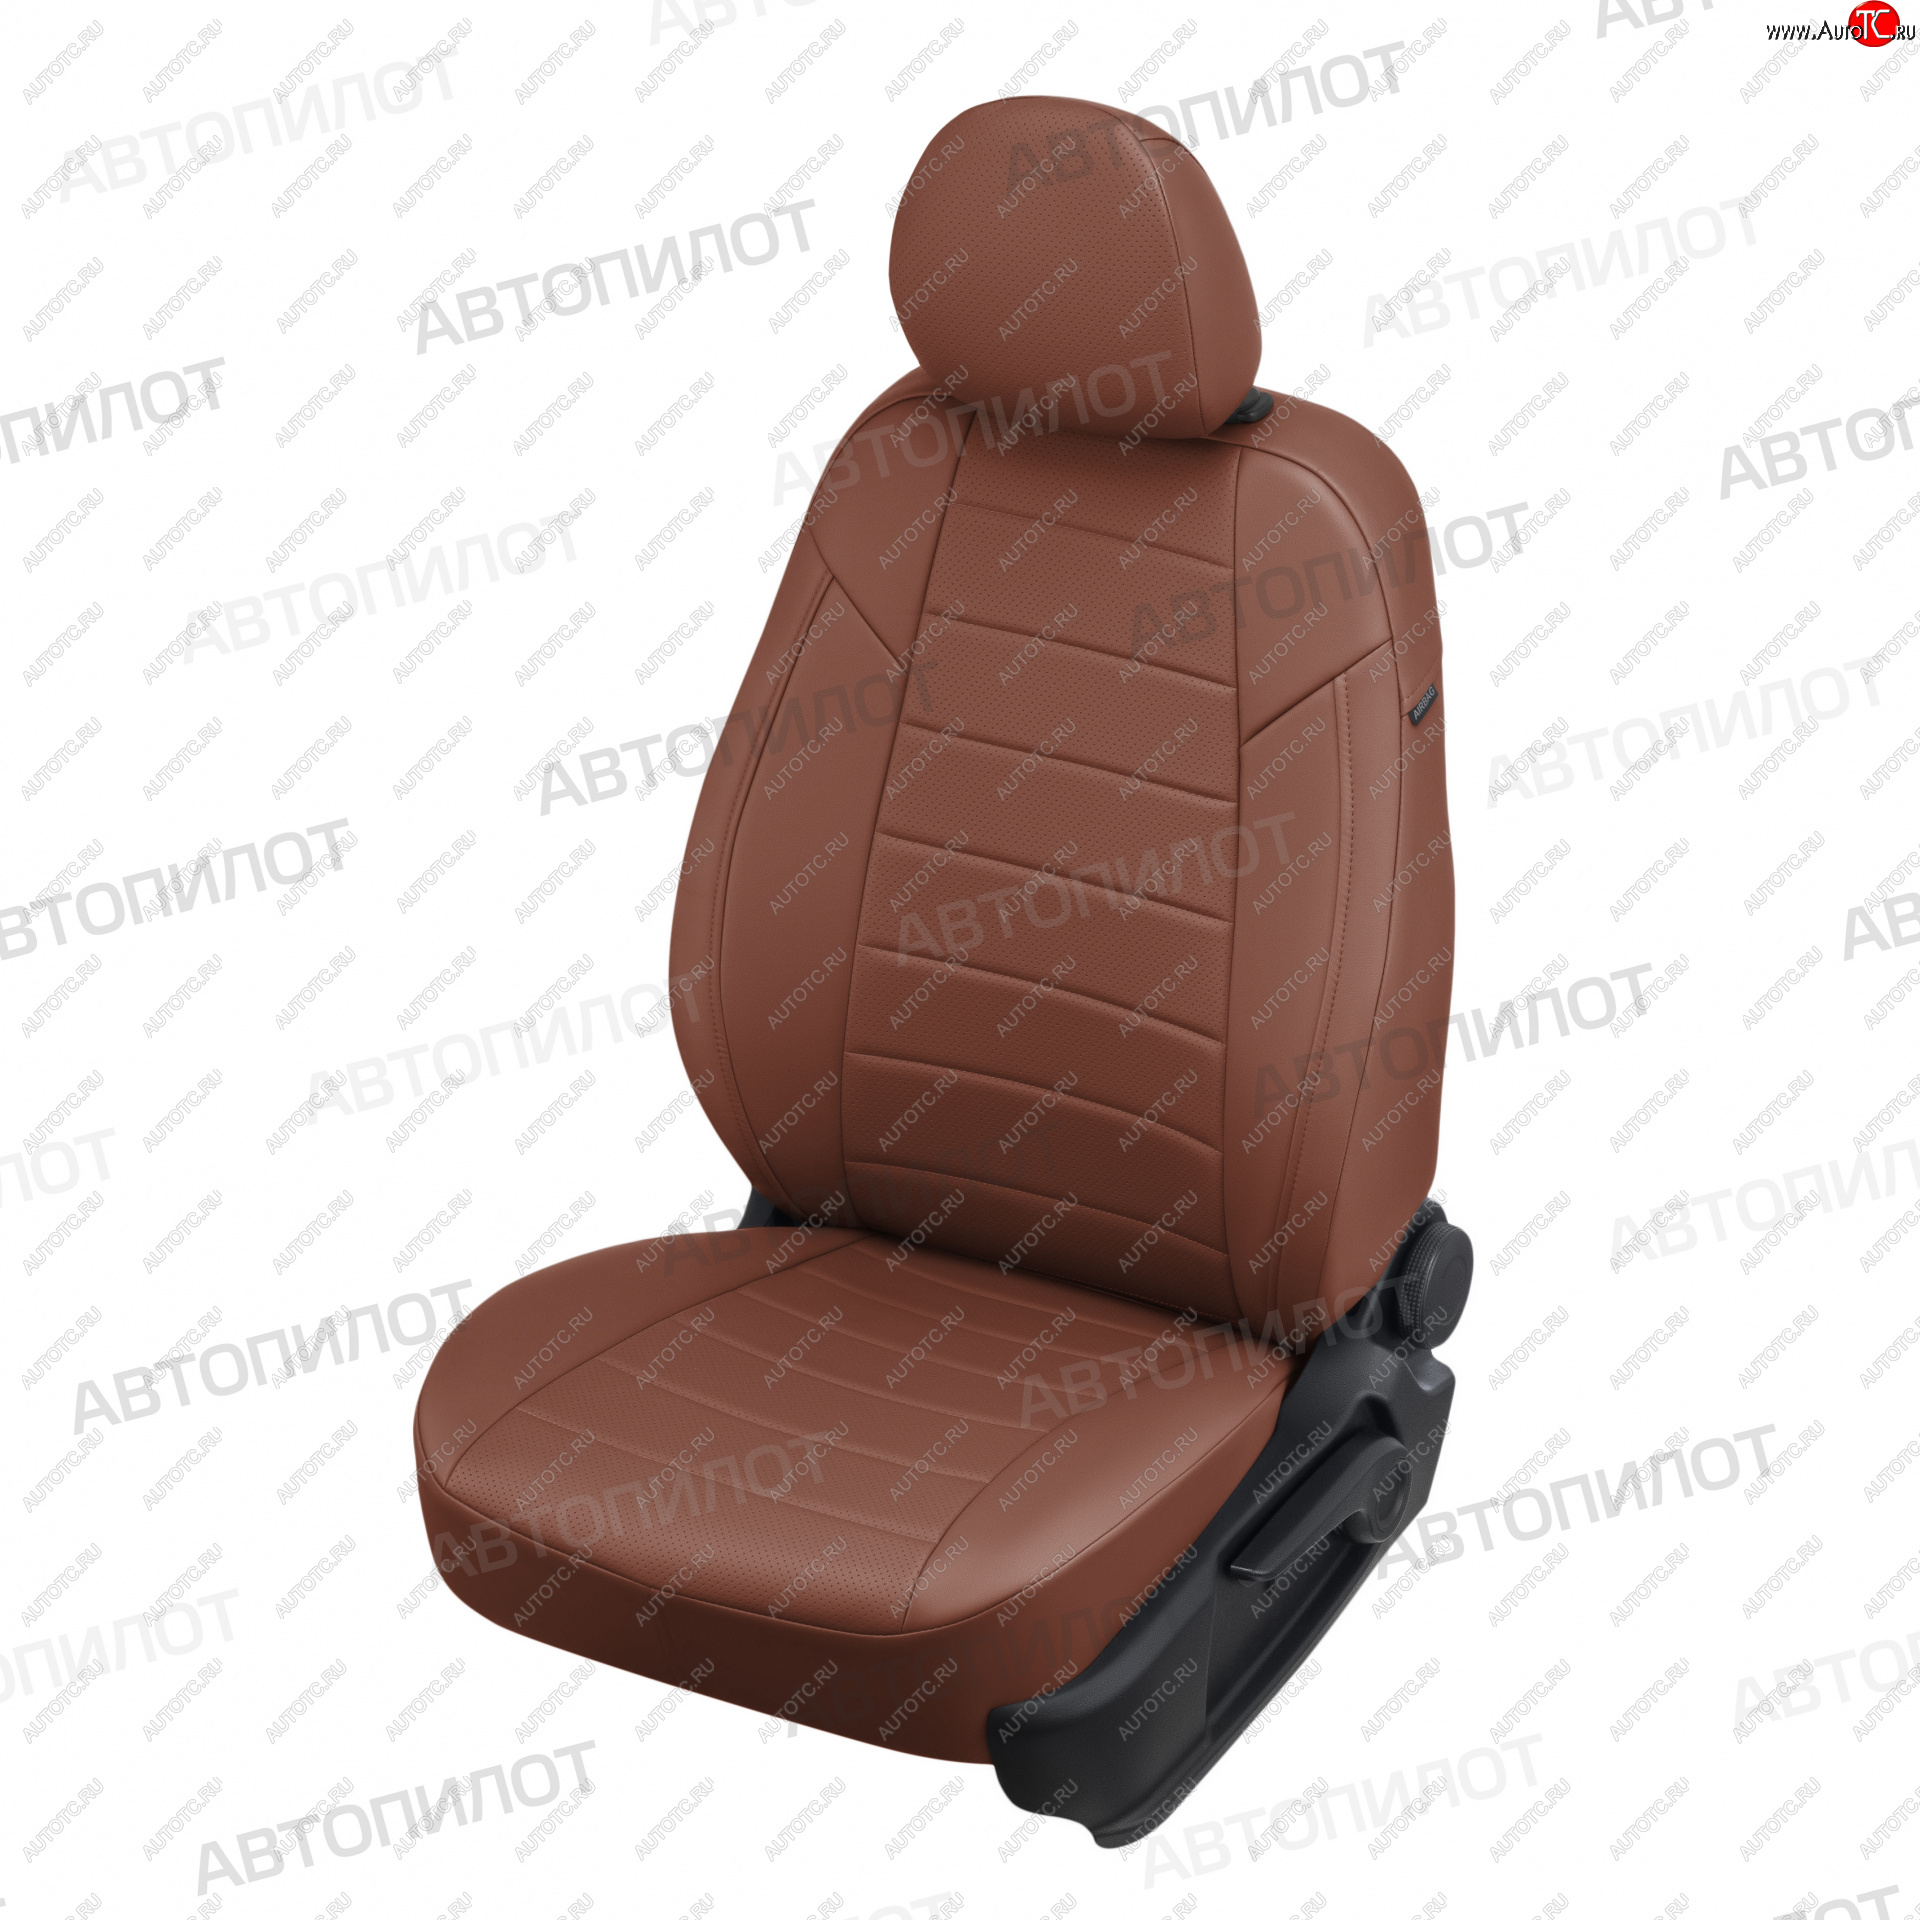 13 449 р. Чехлы сидений (экокожа, 50/50) Автопилот  KIA Sportage  1 JA (1993-2006) (коричневый)